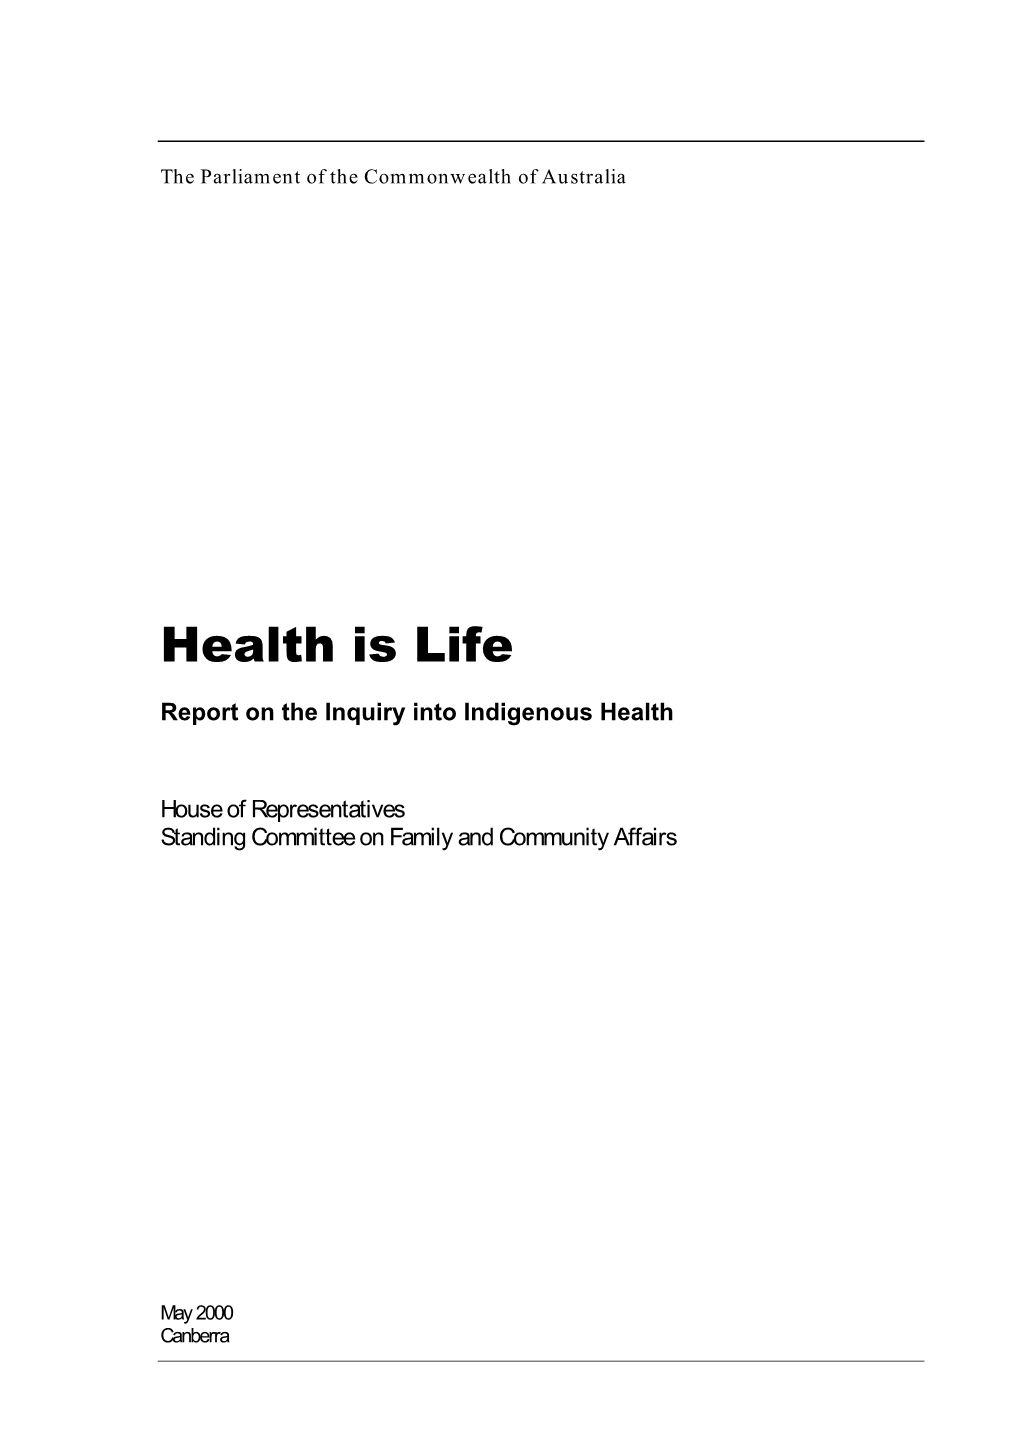 Health Is Life’